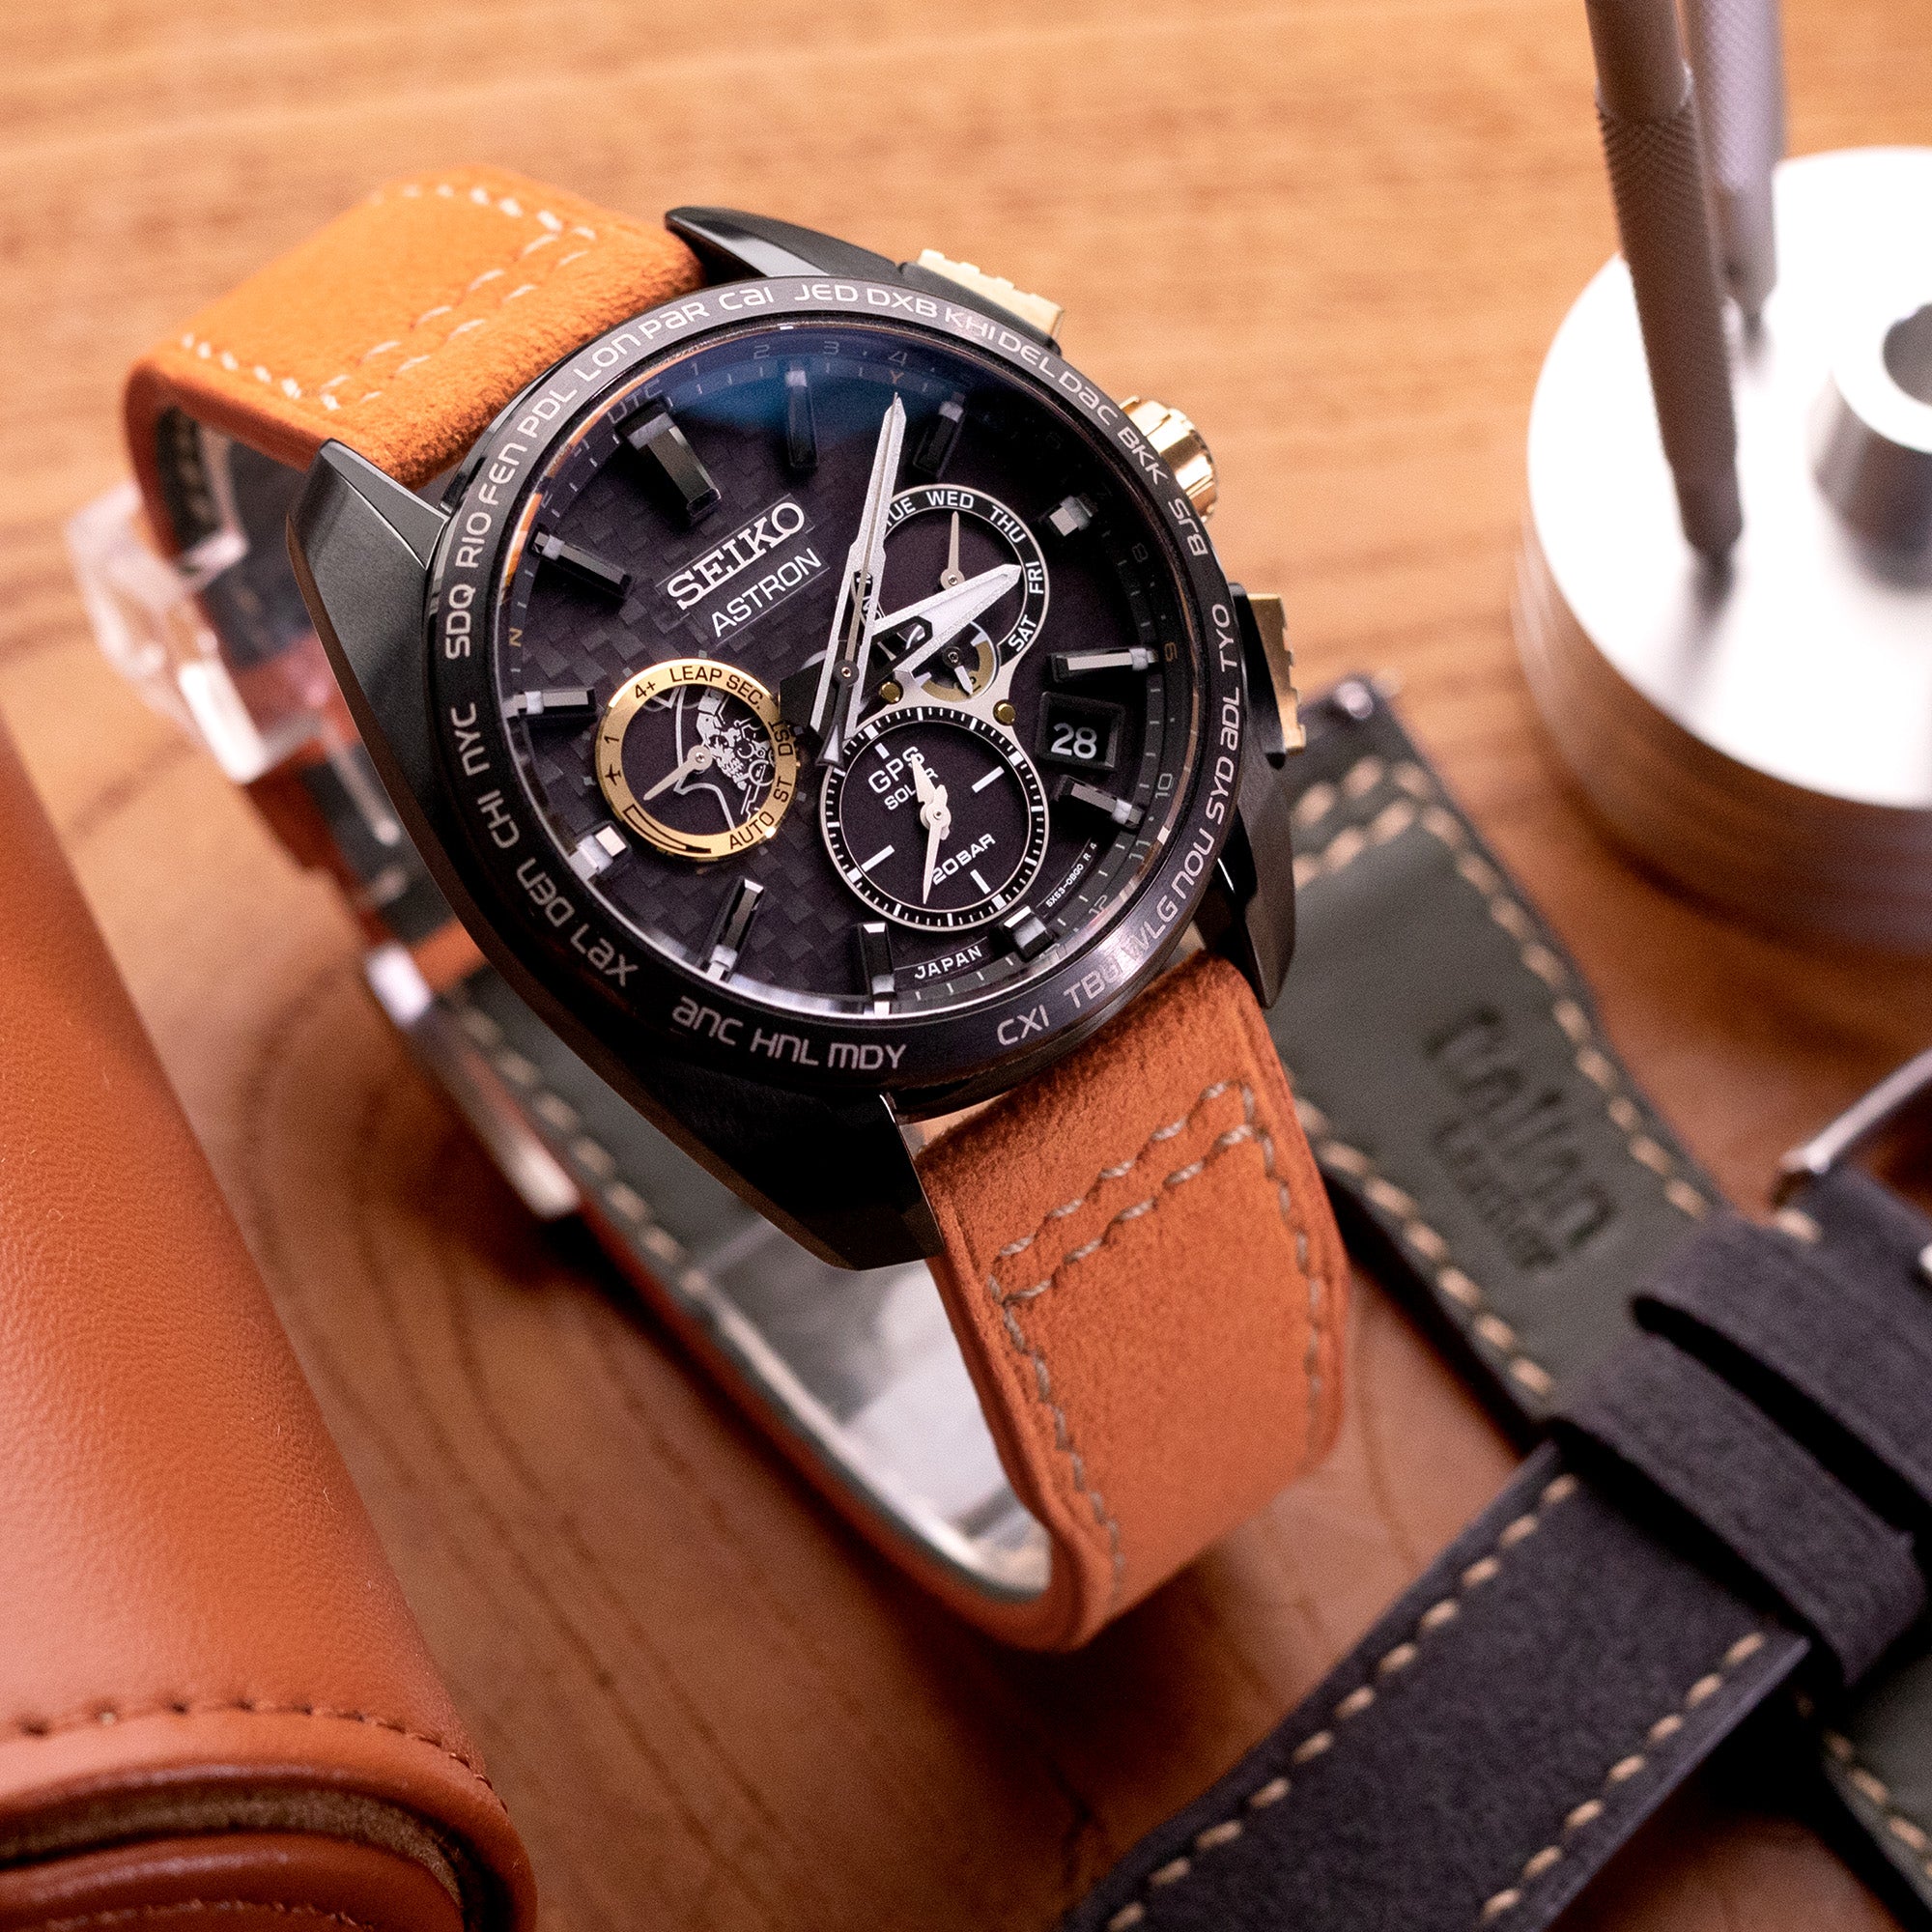 Orange Alcantara Fabric Quick Release Watch Band, Beige Stitching, 20mm, 21mm or 22mm Strapcode watch bands